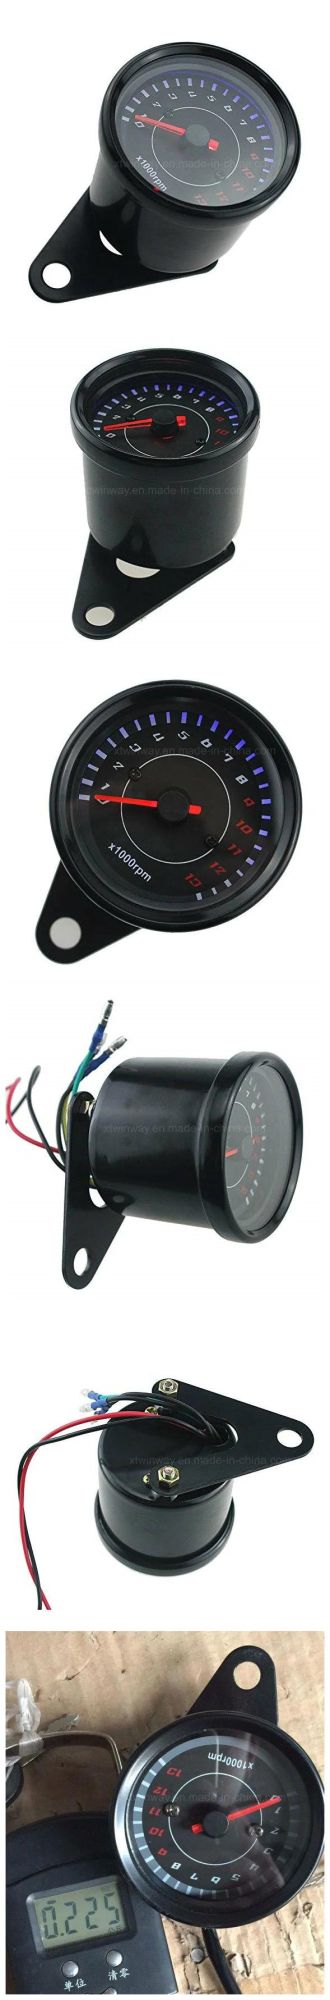 LED Backlight Meter Tachometer Gauge Rev Counter Motorcycle Parts